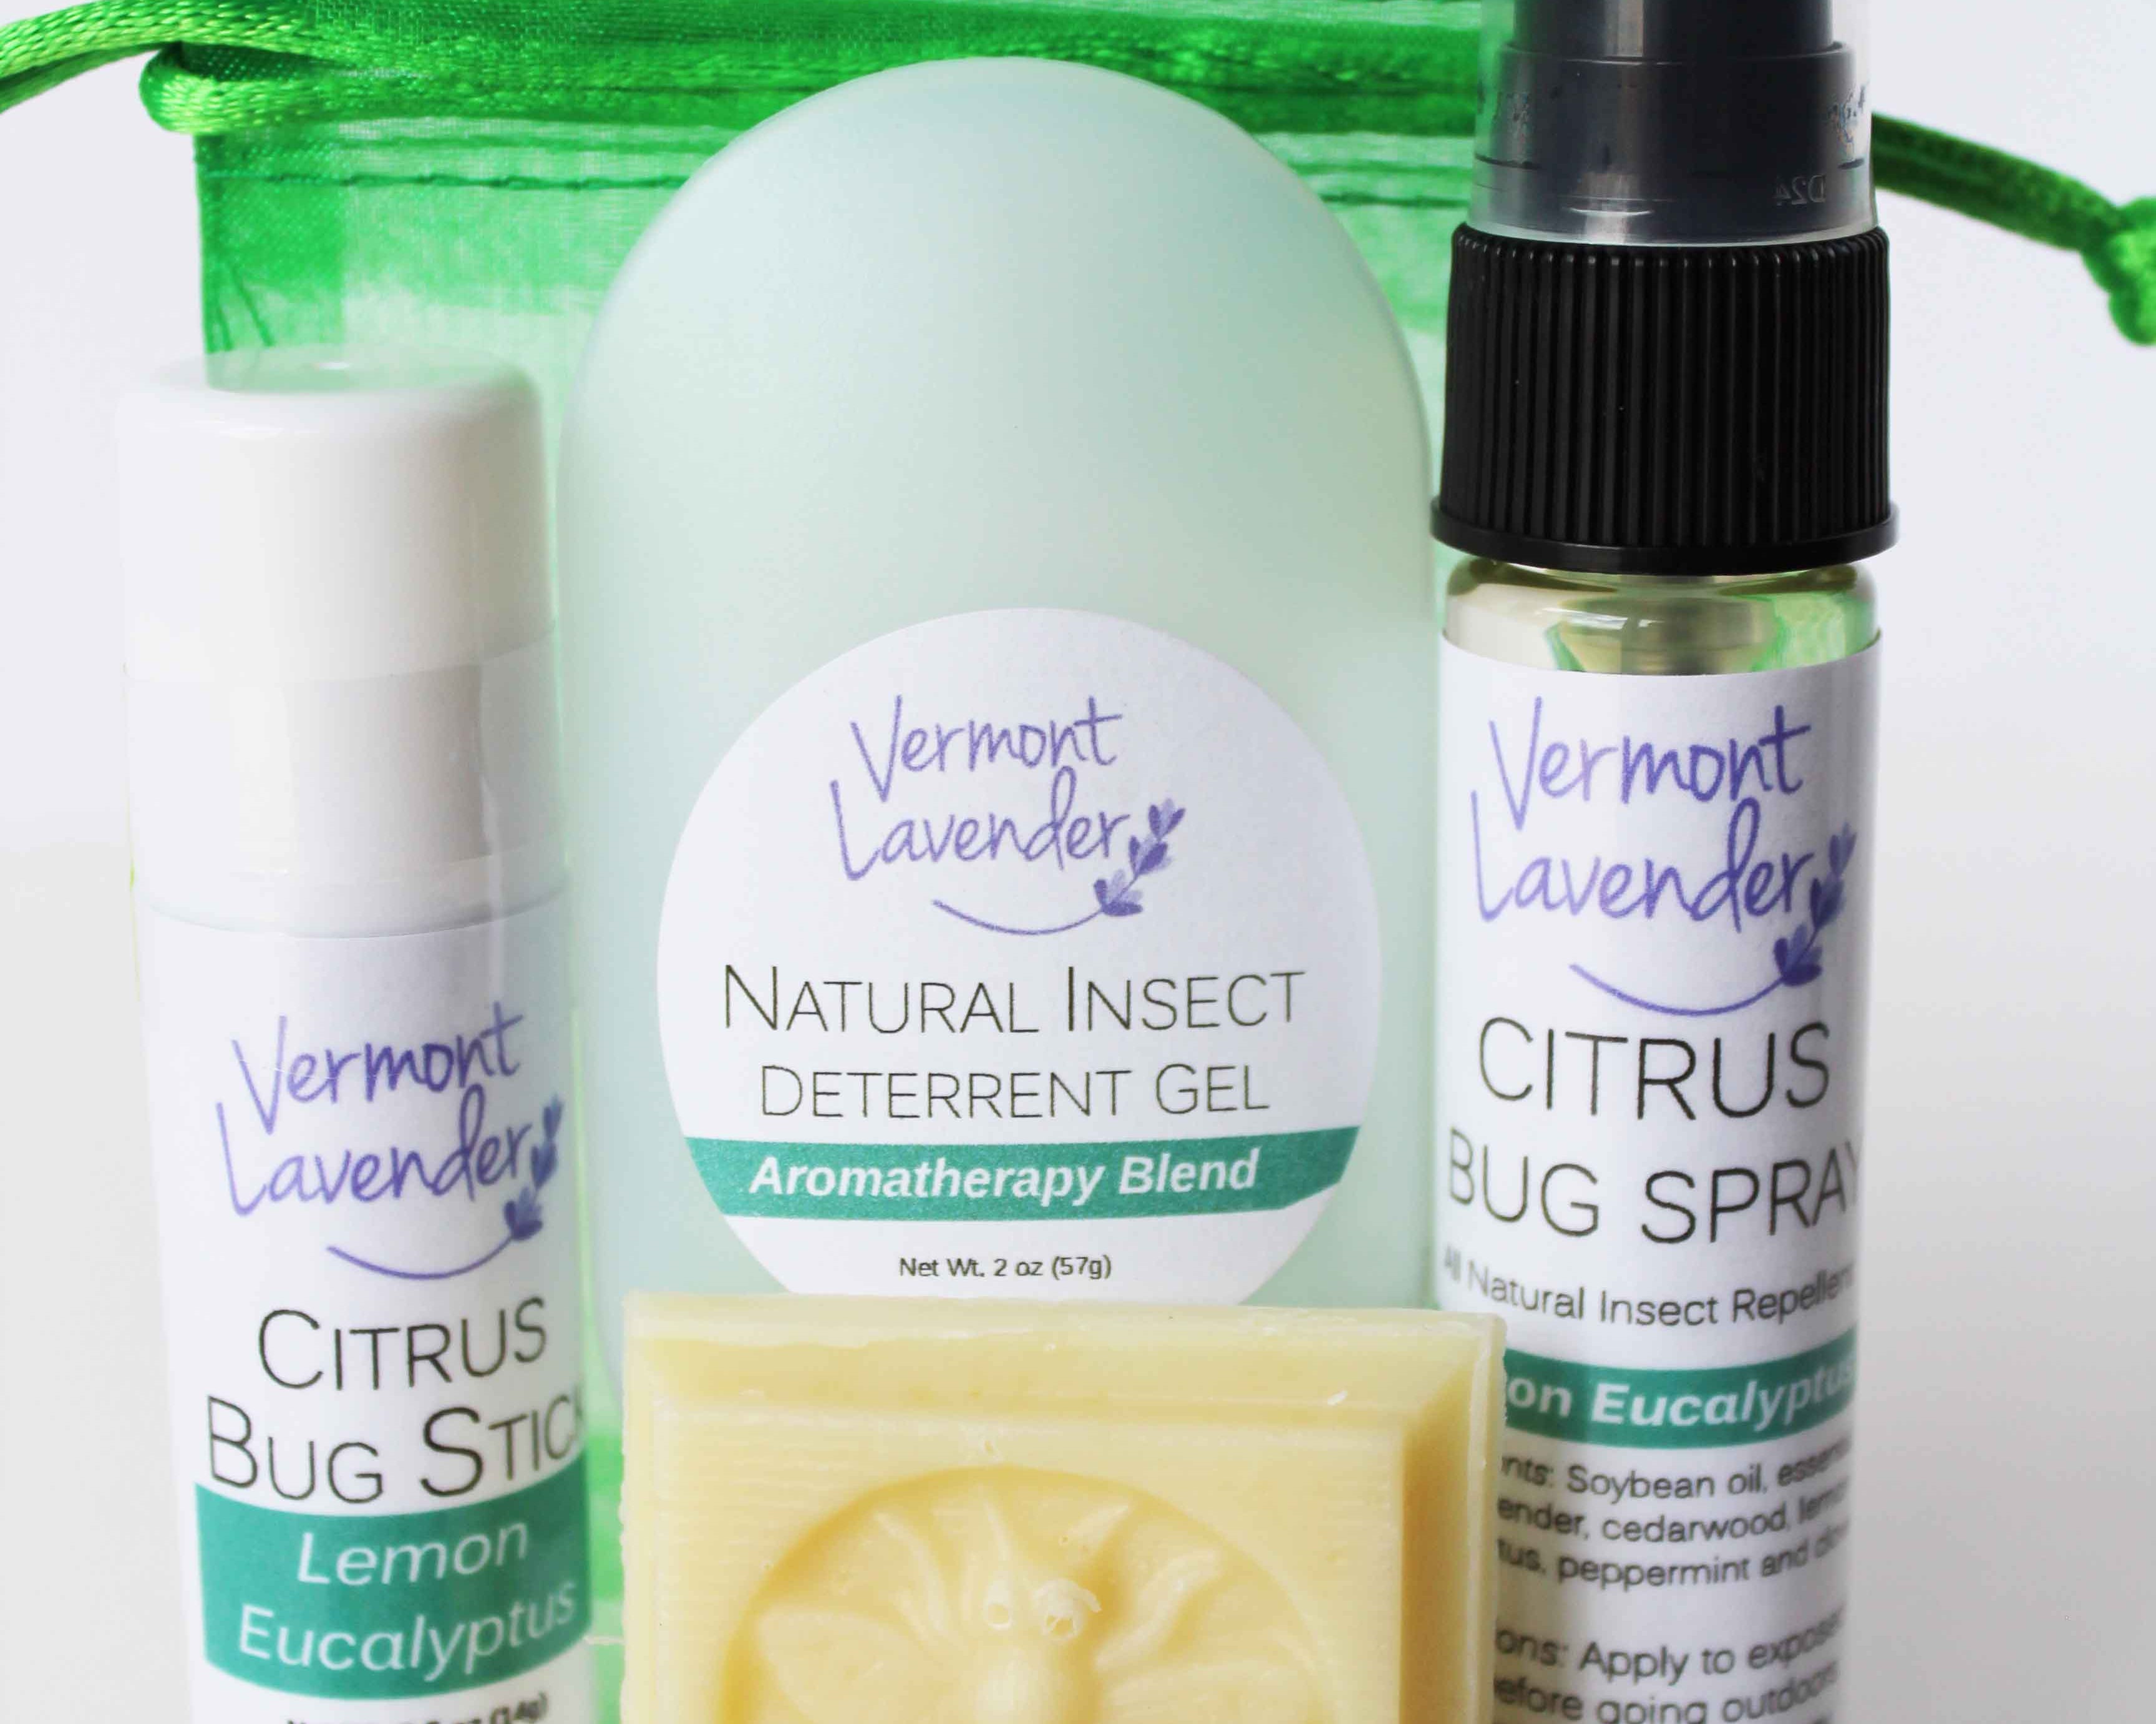  Instagram, LinkedIn, or Facebook - will win a Vermont Lavender Bug Defense Kit!